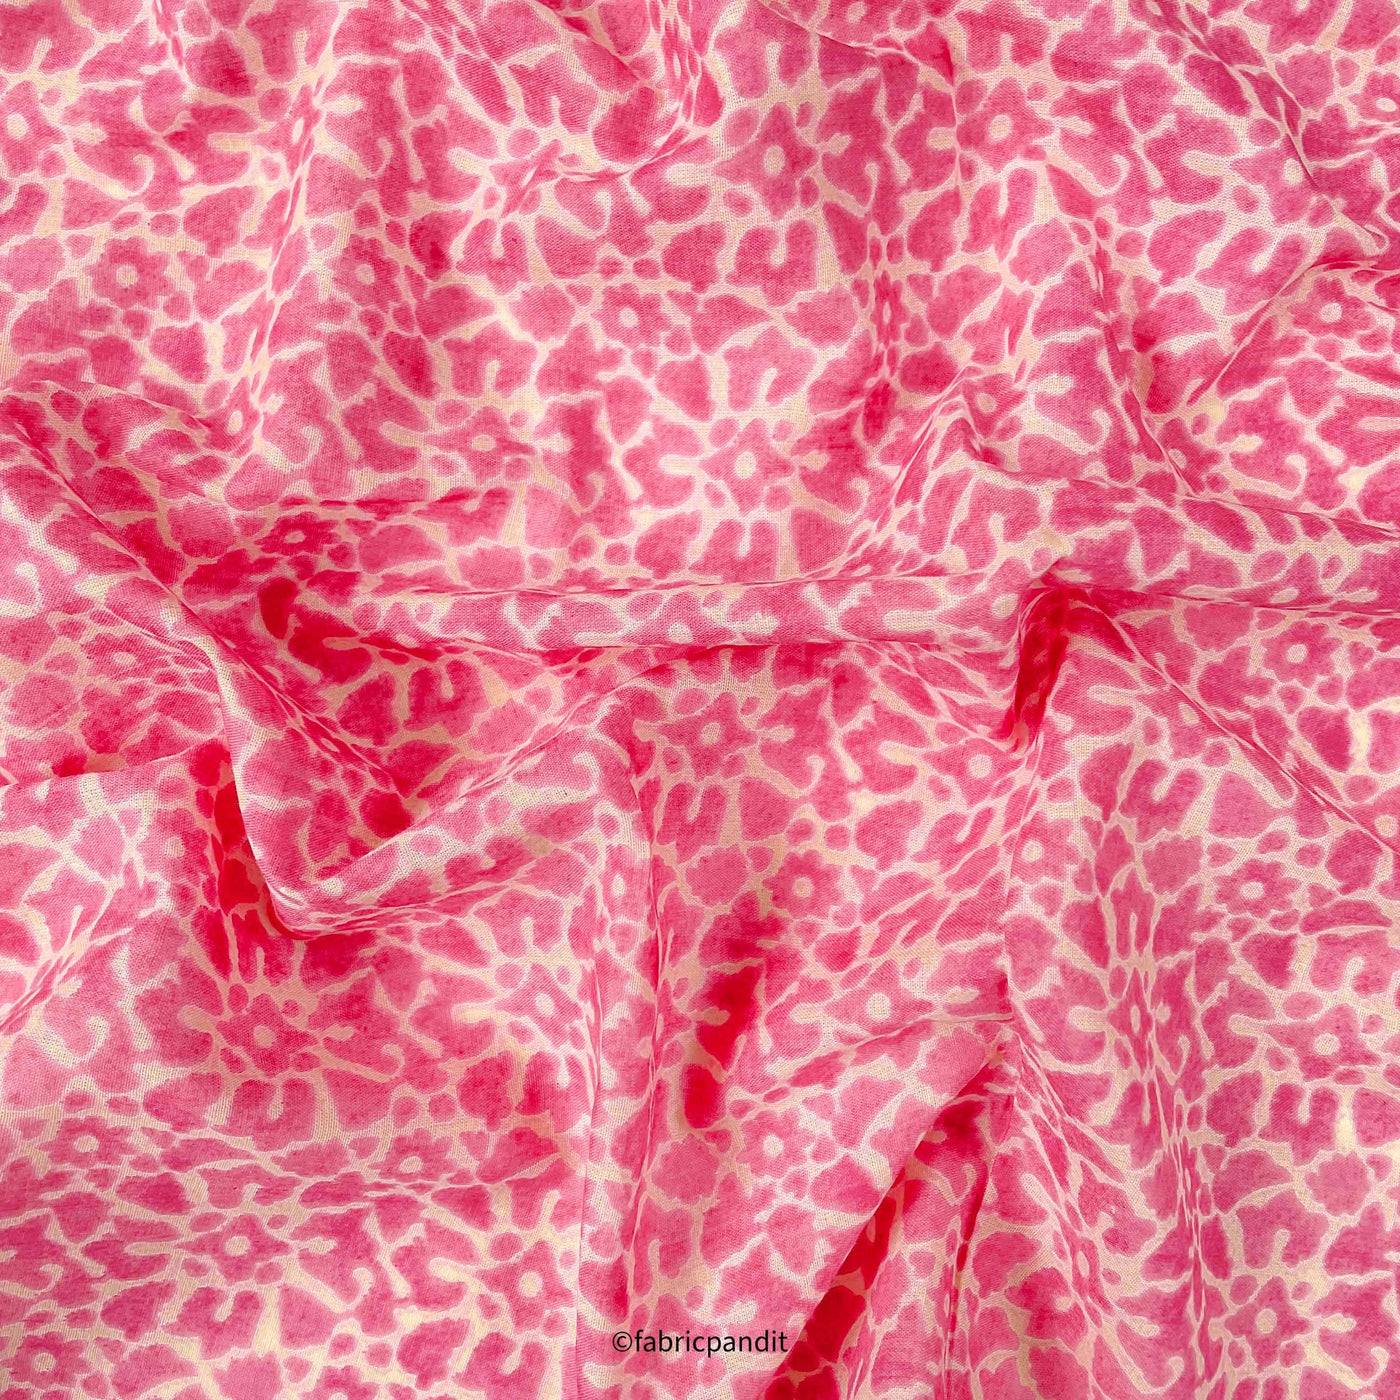 Hand Block Printed Cotton Fabric Cut Piece (CUT PIECE) Peach Rose & White Geometric Marble Effect Batik Natural Dyed Hand Block Printed Pure Cotton Fabric (Width 42 inches)